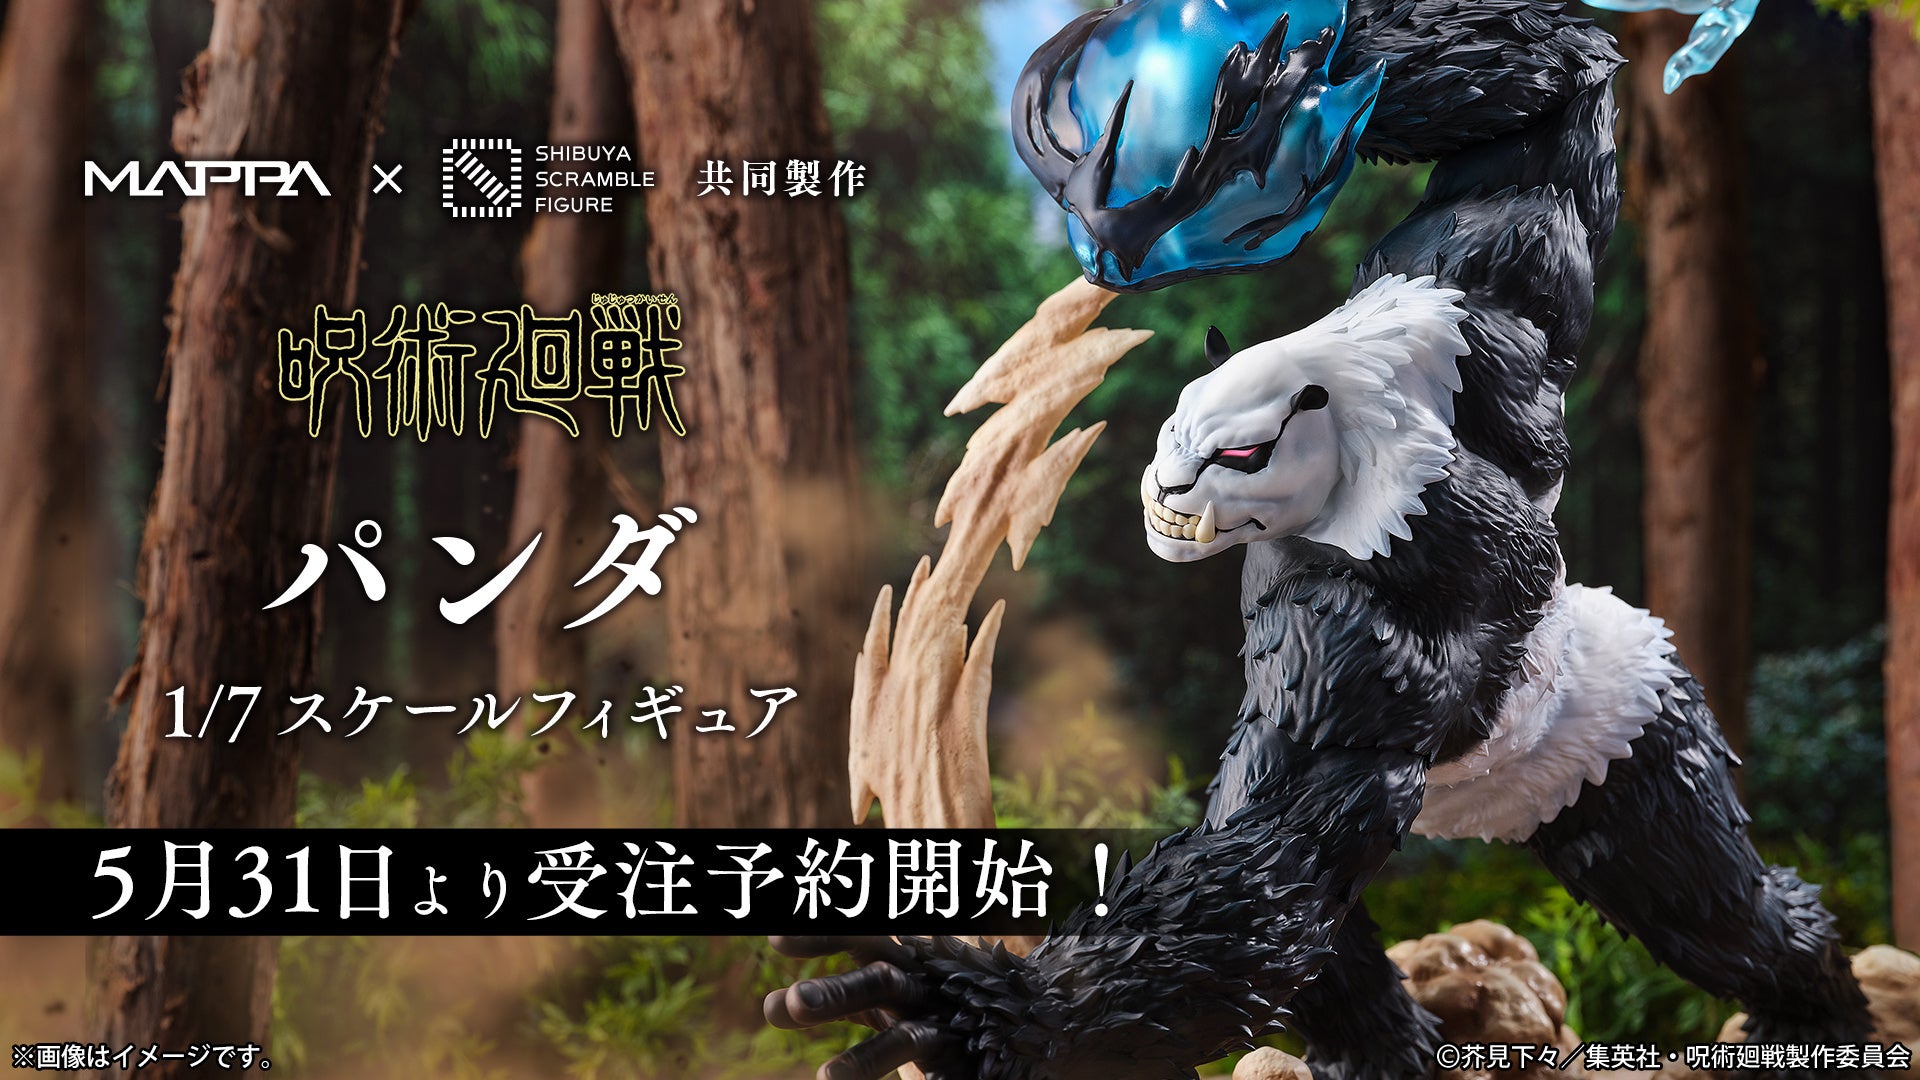 SHIBUYA SCRAMBLE FIGURE、TVアニメ『呪術廻戦』よりパンダが1/7スケールフィギュアで登場！5月31日（水）から予約販売開始！